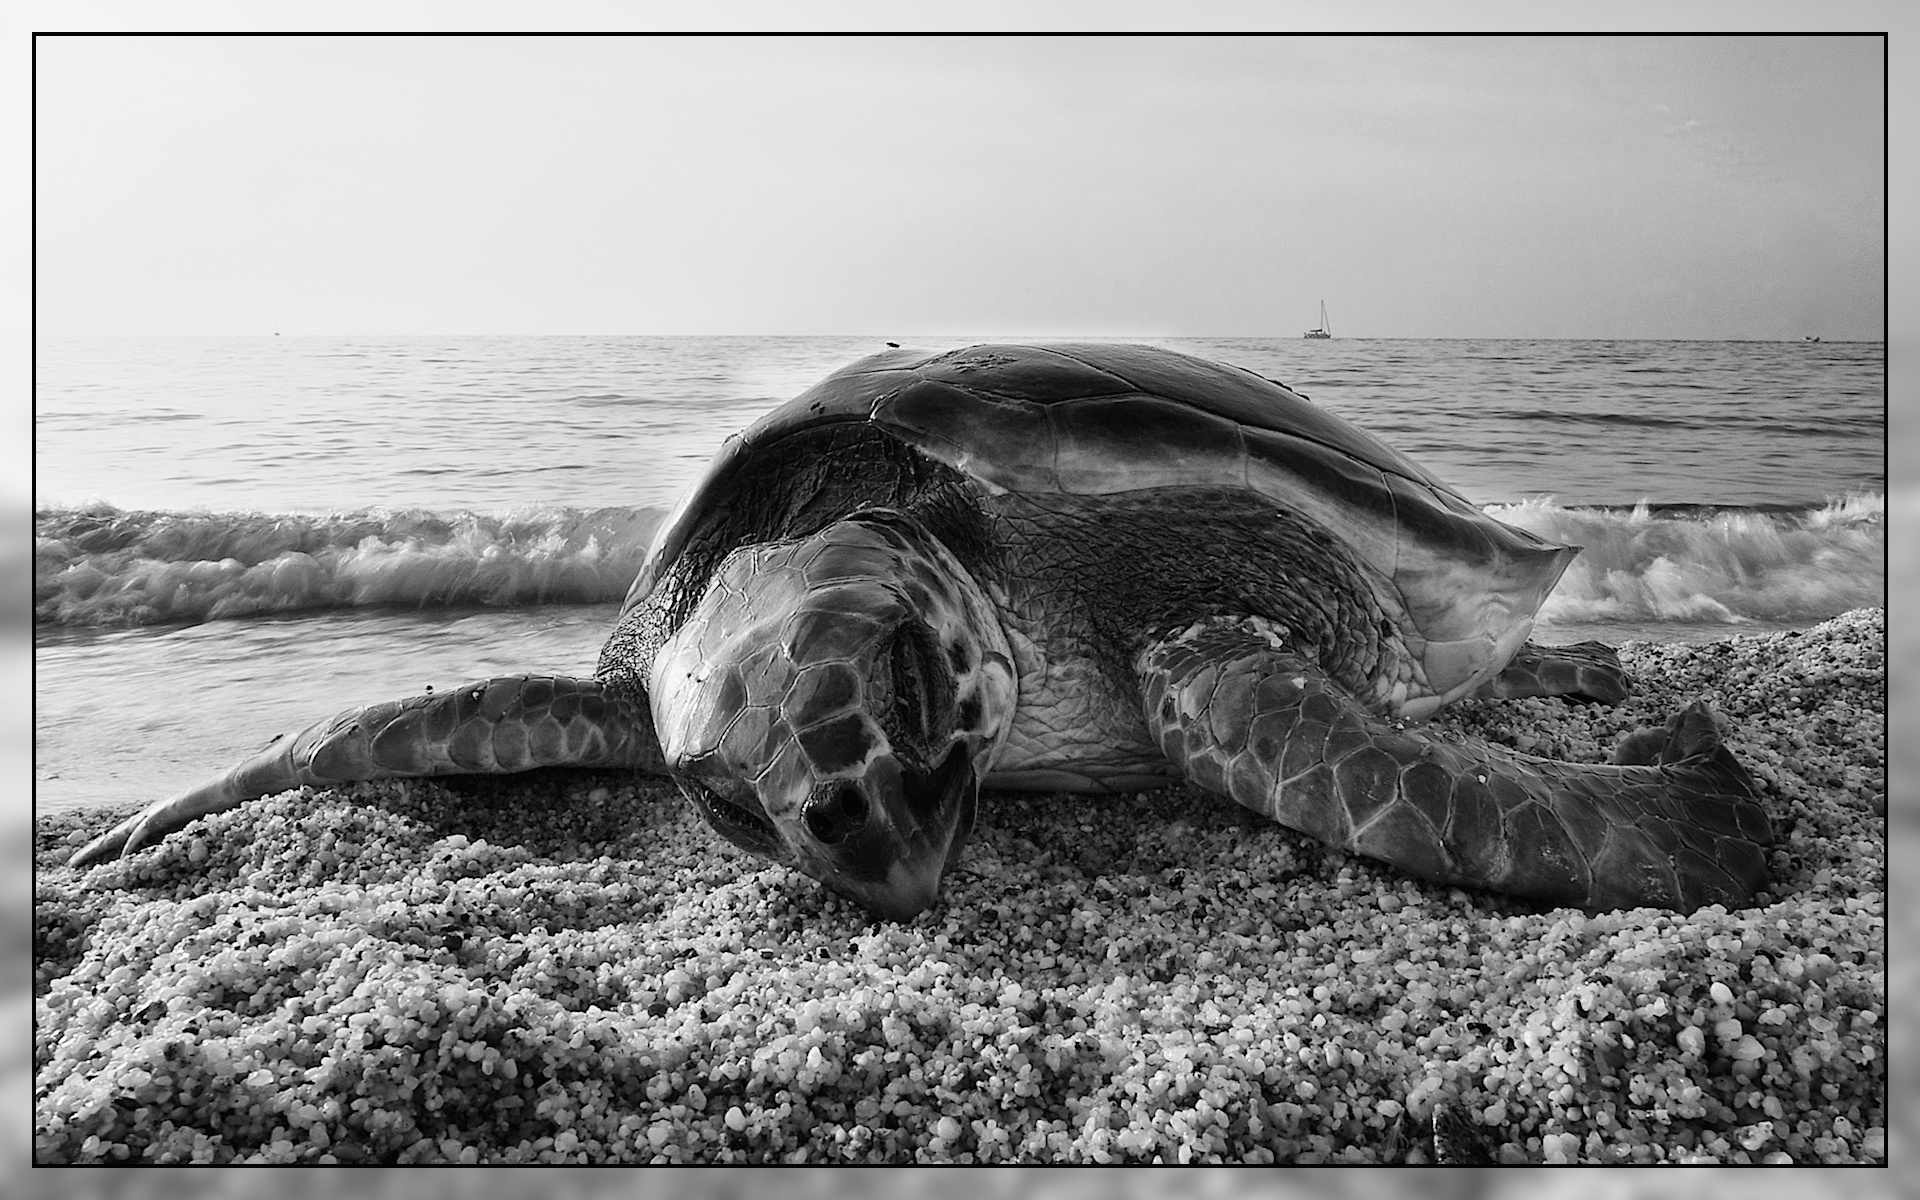 Turtle on the beach...